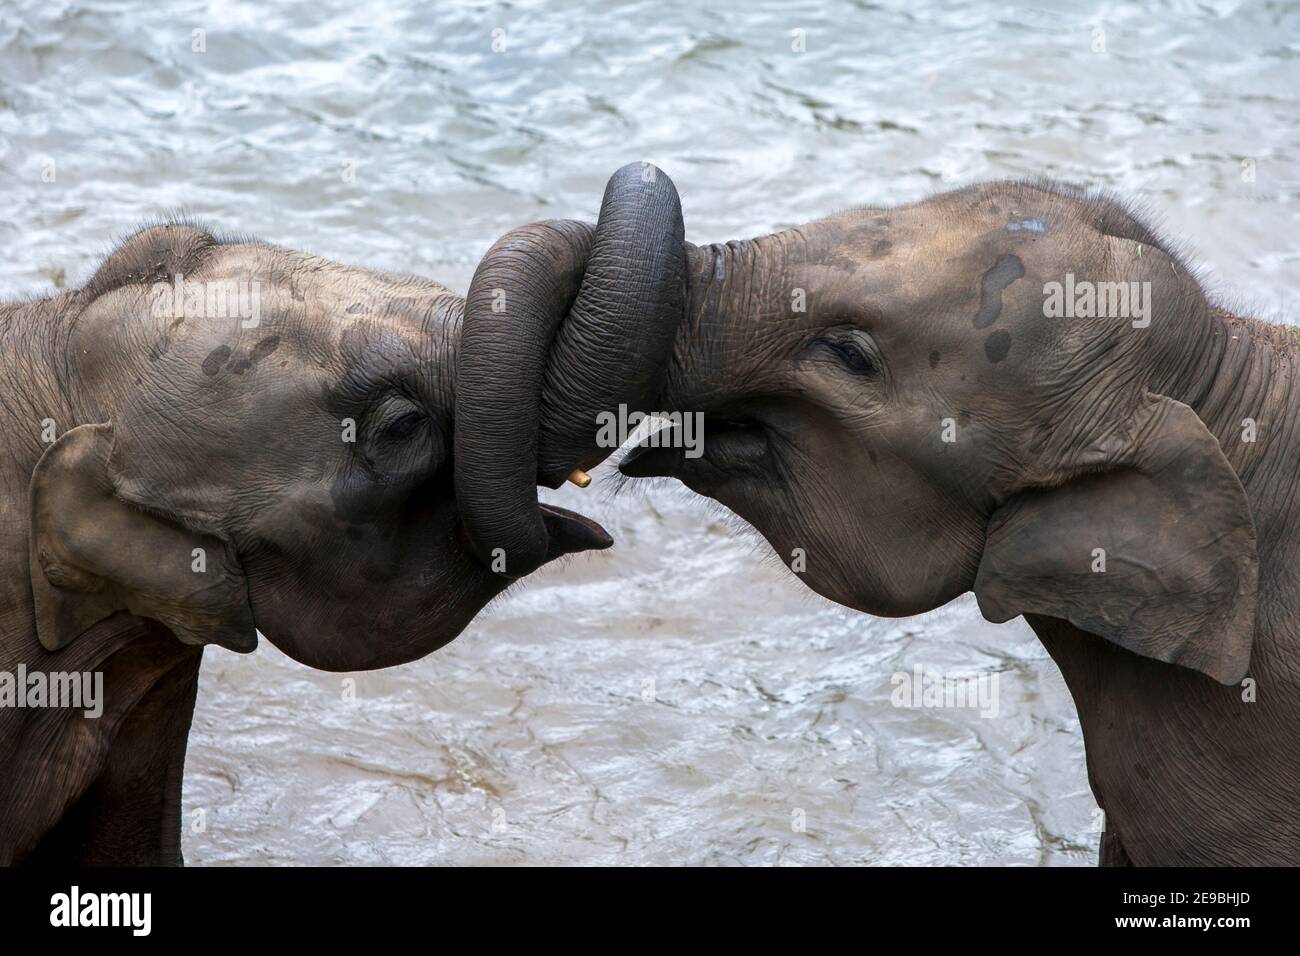 Young elephants from the Pinnawala Elephant Orphanage play in the Maha Oya River in central Sri Lanka. Stock Photo